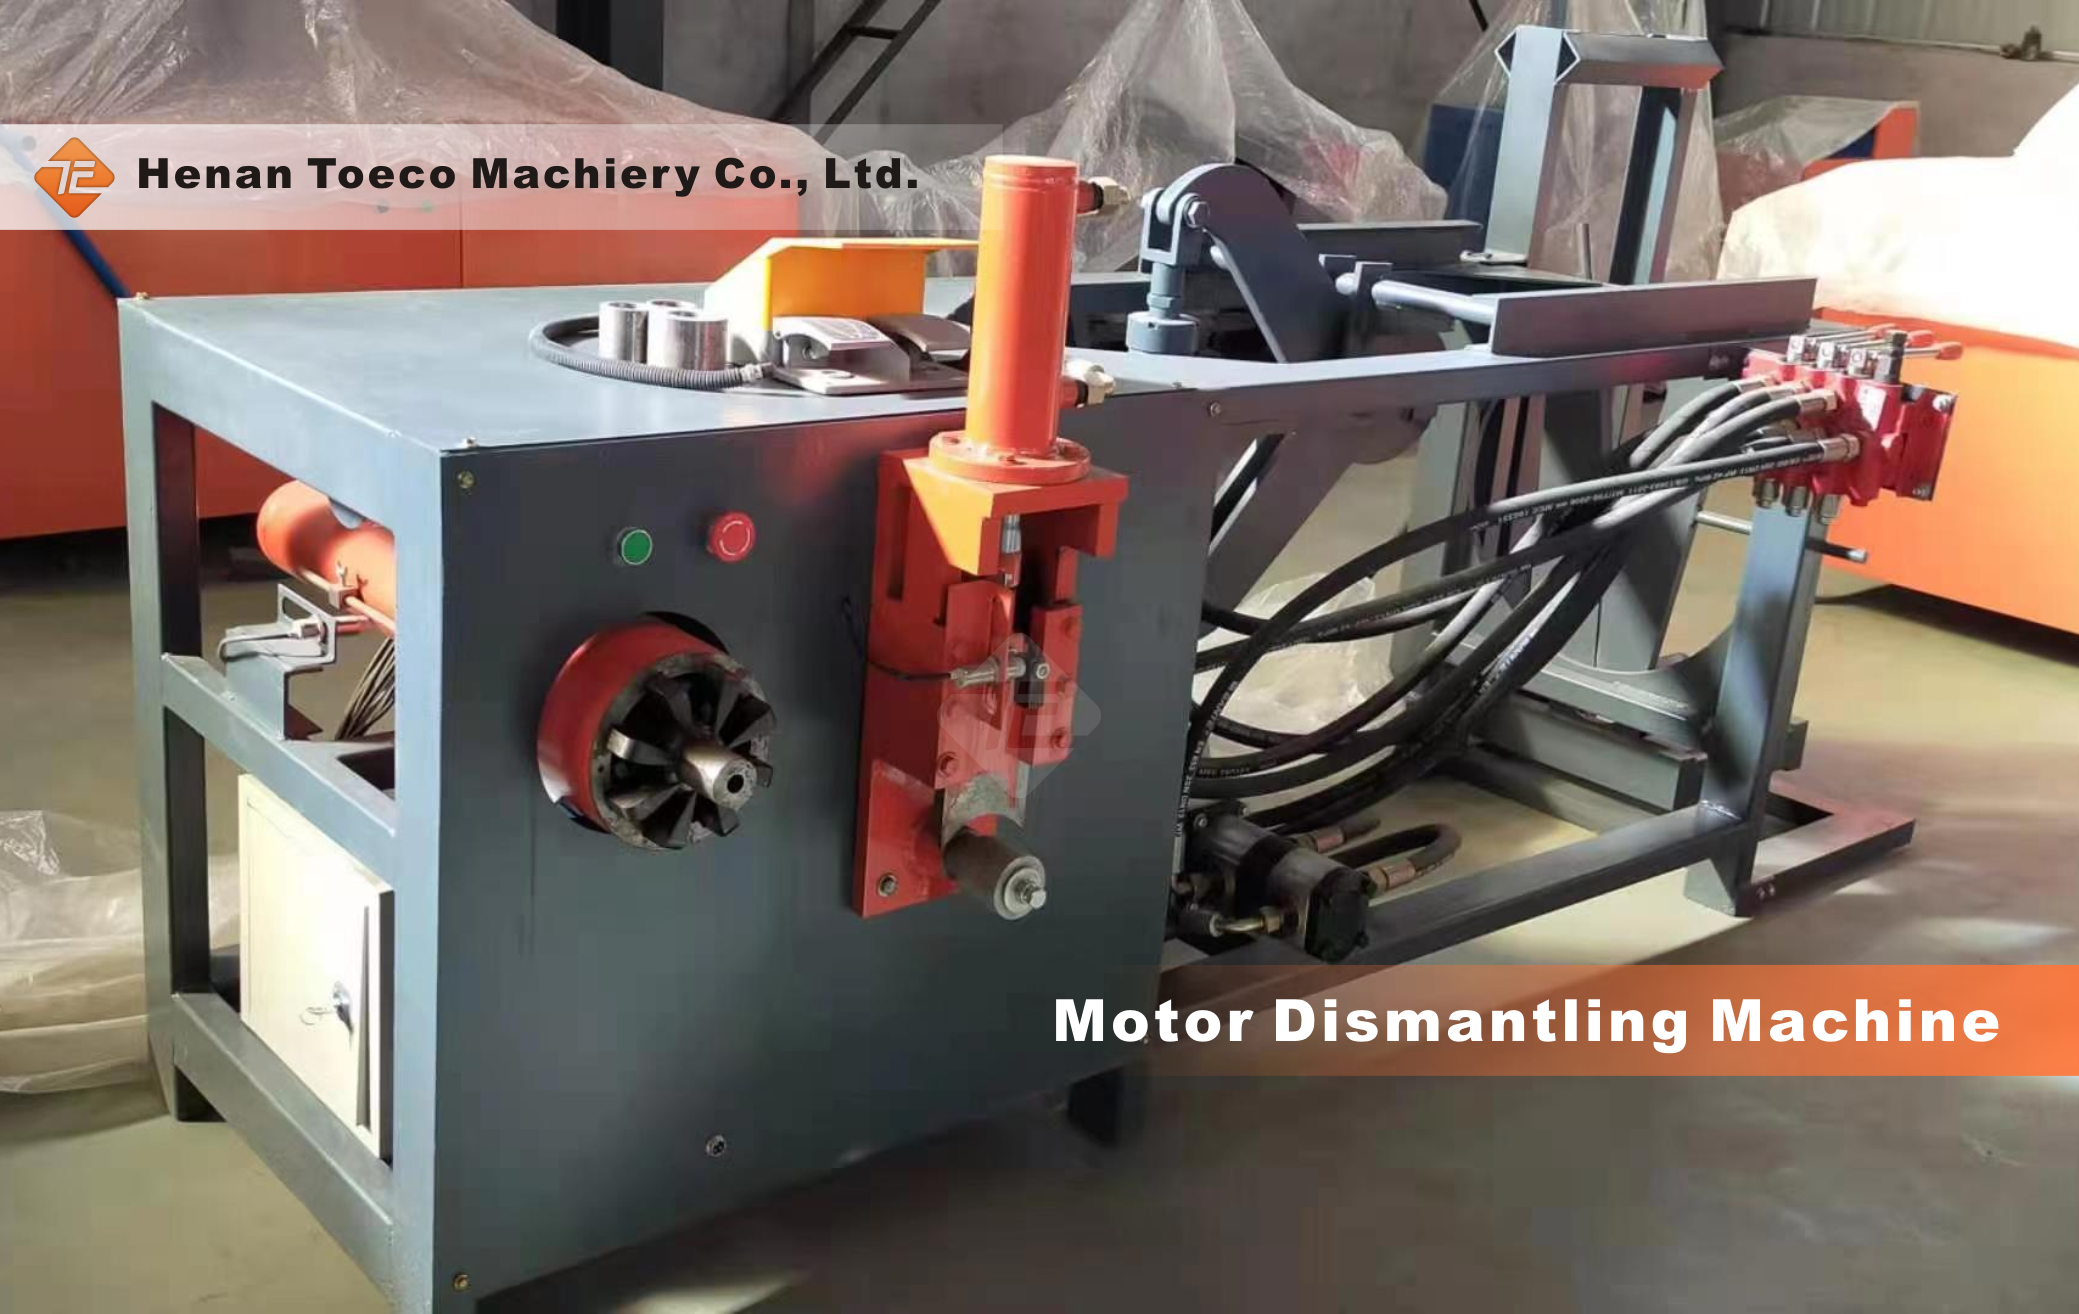 Motor Dismantling Machine